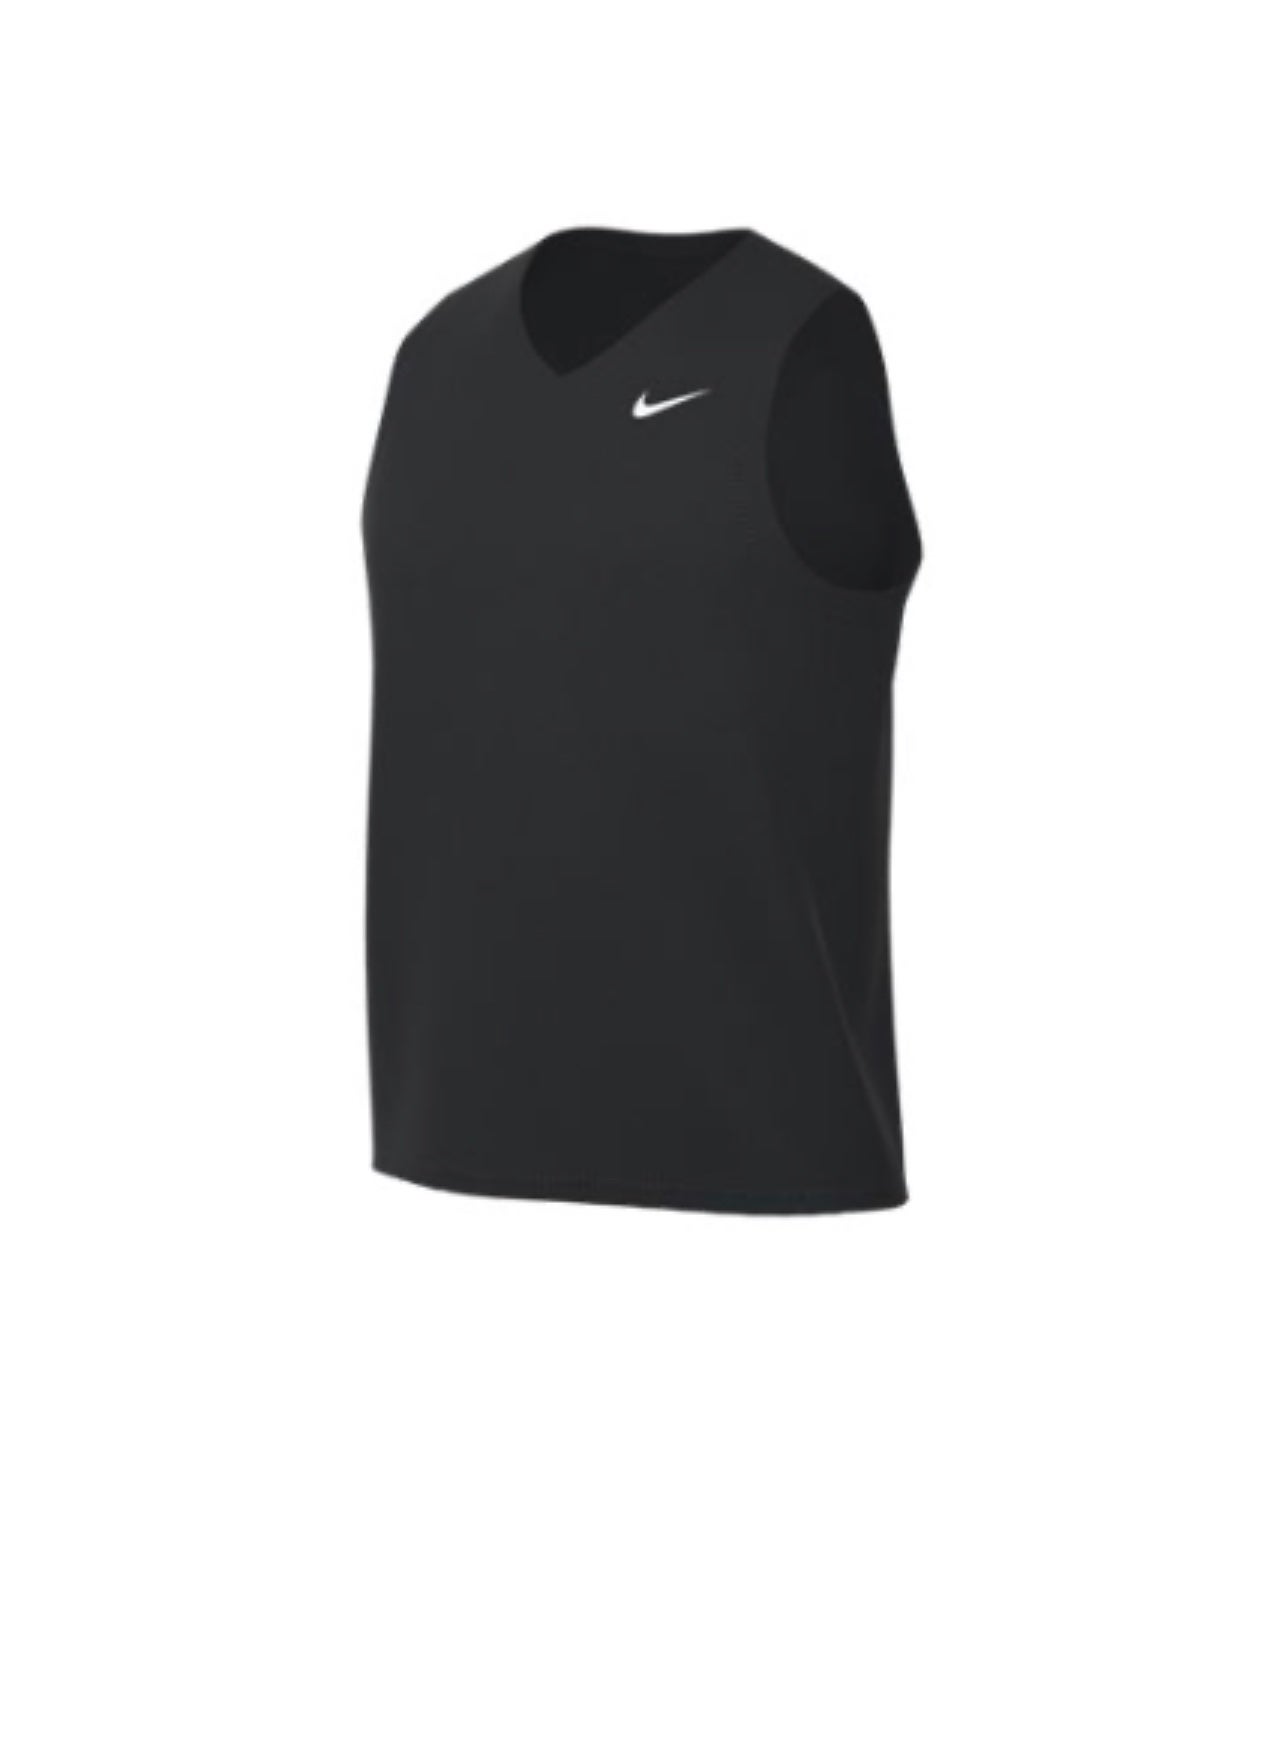 Duke® Limited Jersey by Nike®